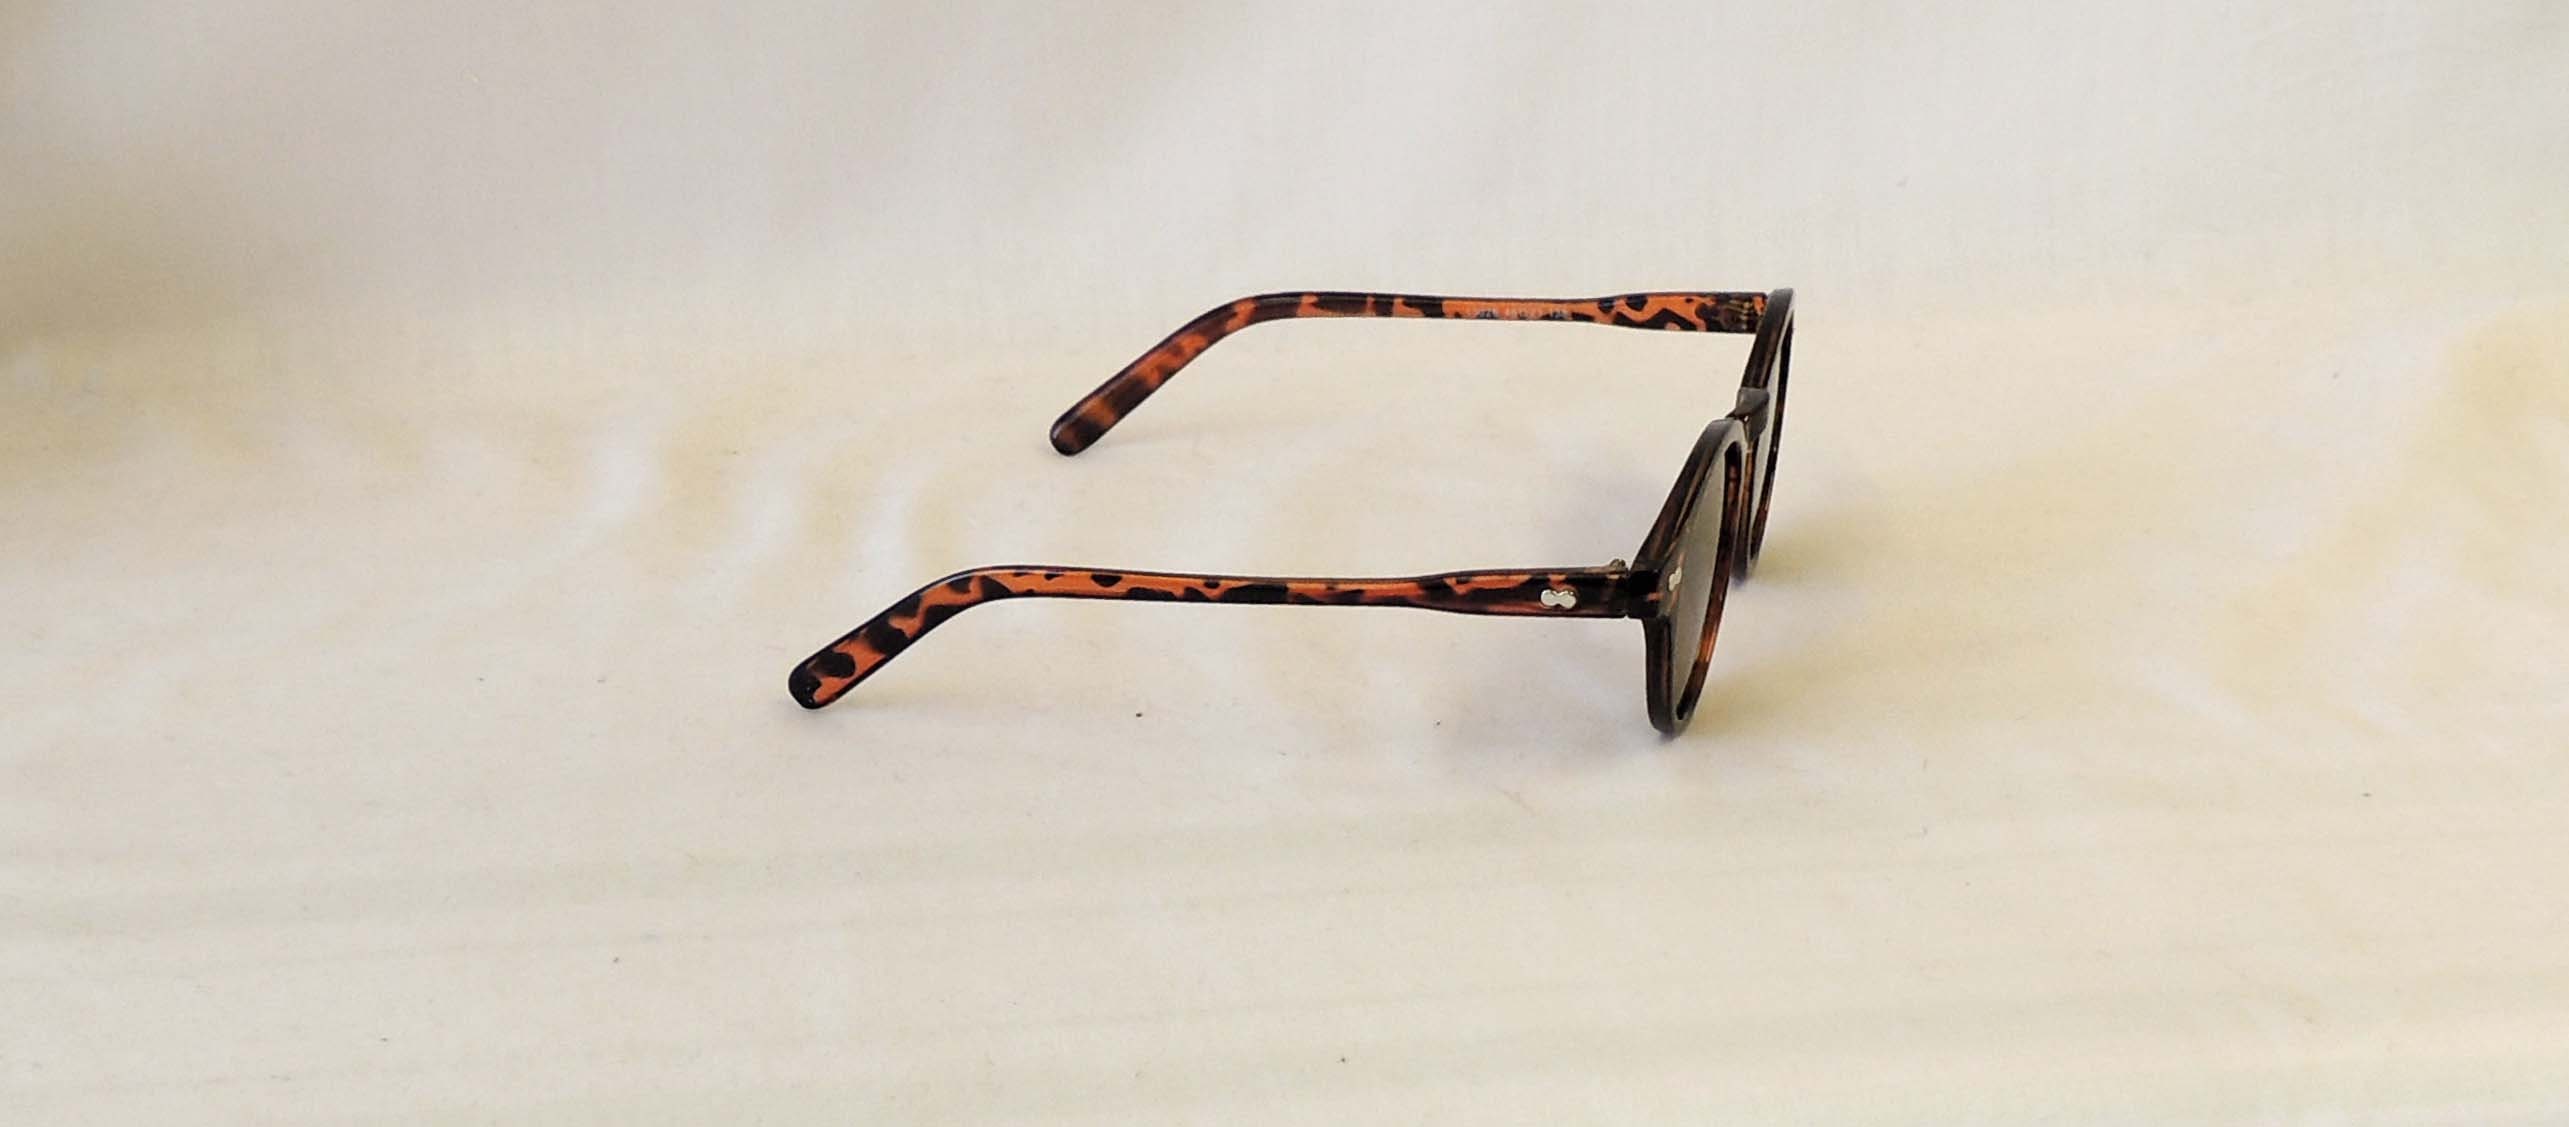 Faux Tortoiseshell Harlow Sunglasses 1930s 1940s style | Etsy